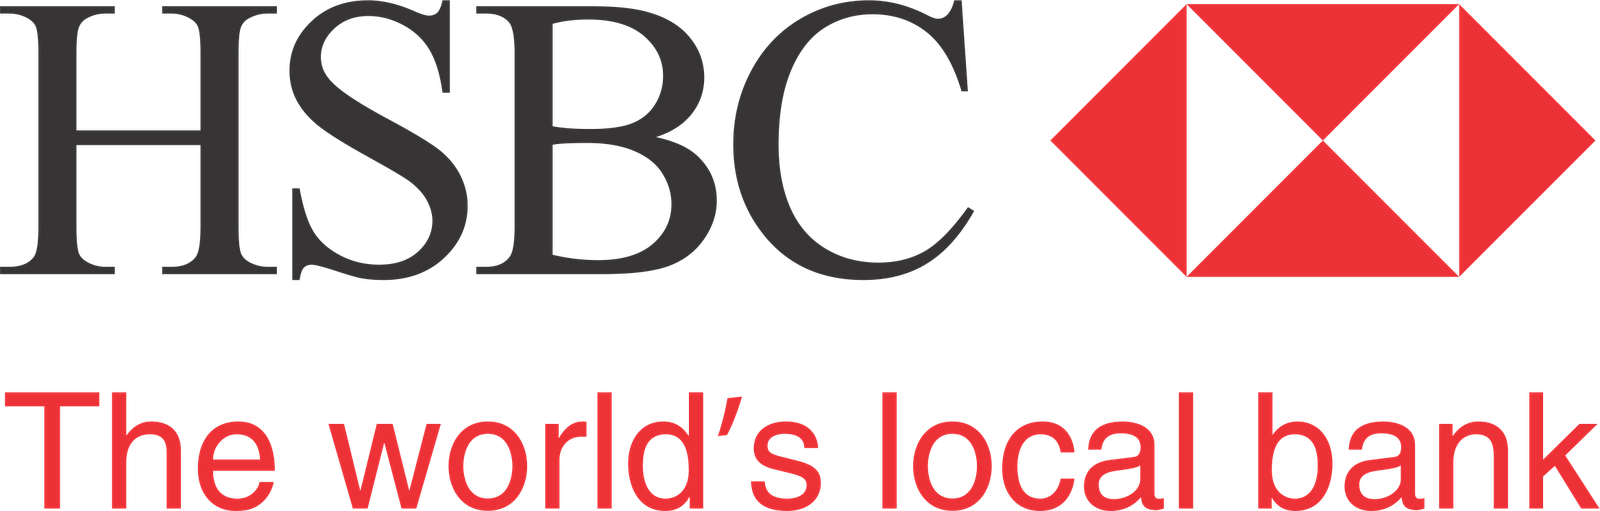 Hsbc Logo PNG - 175868